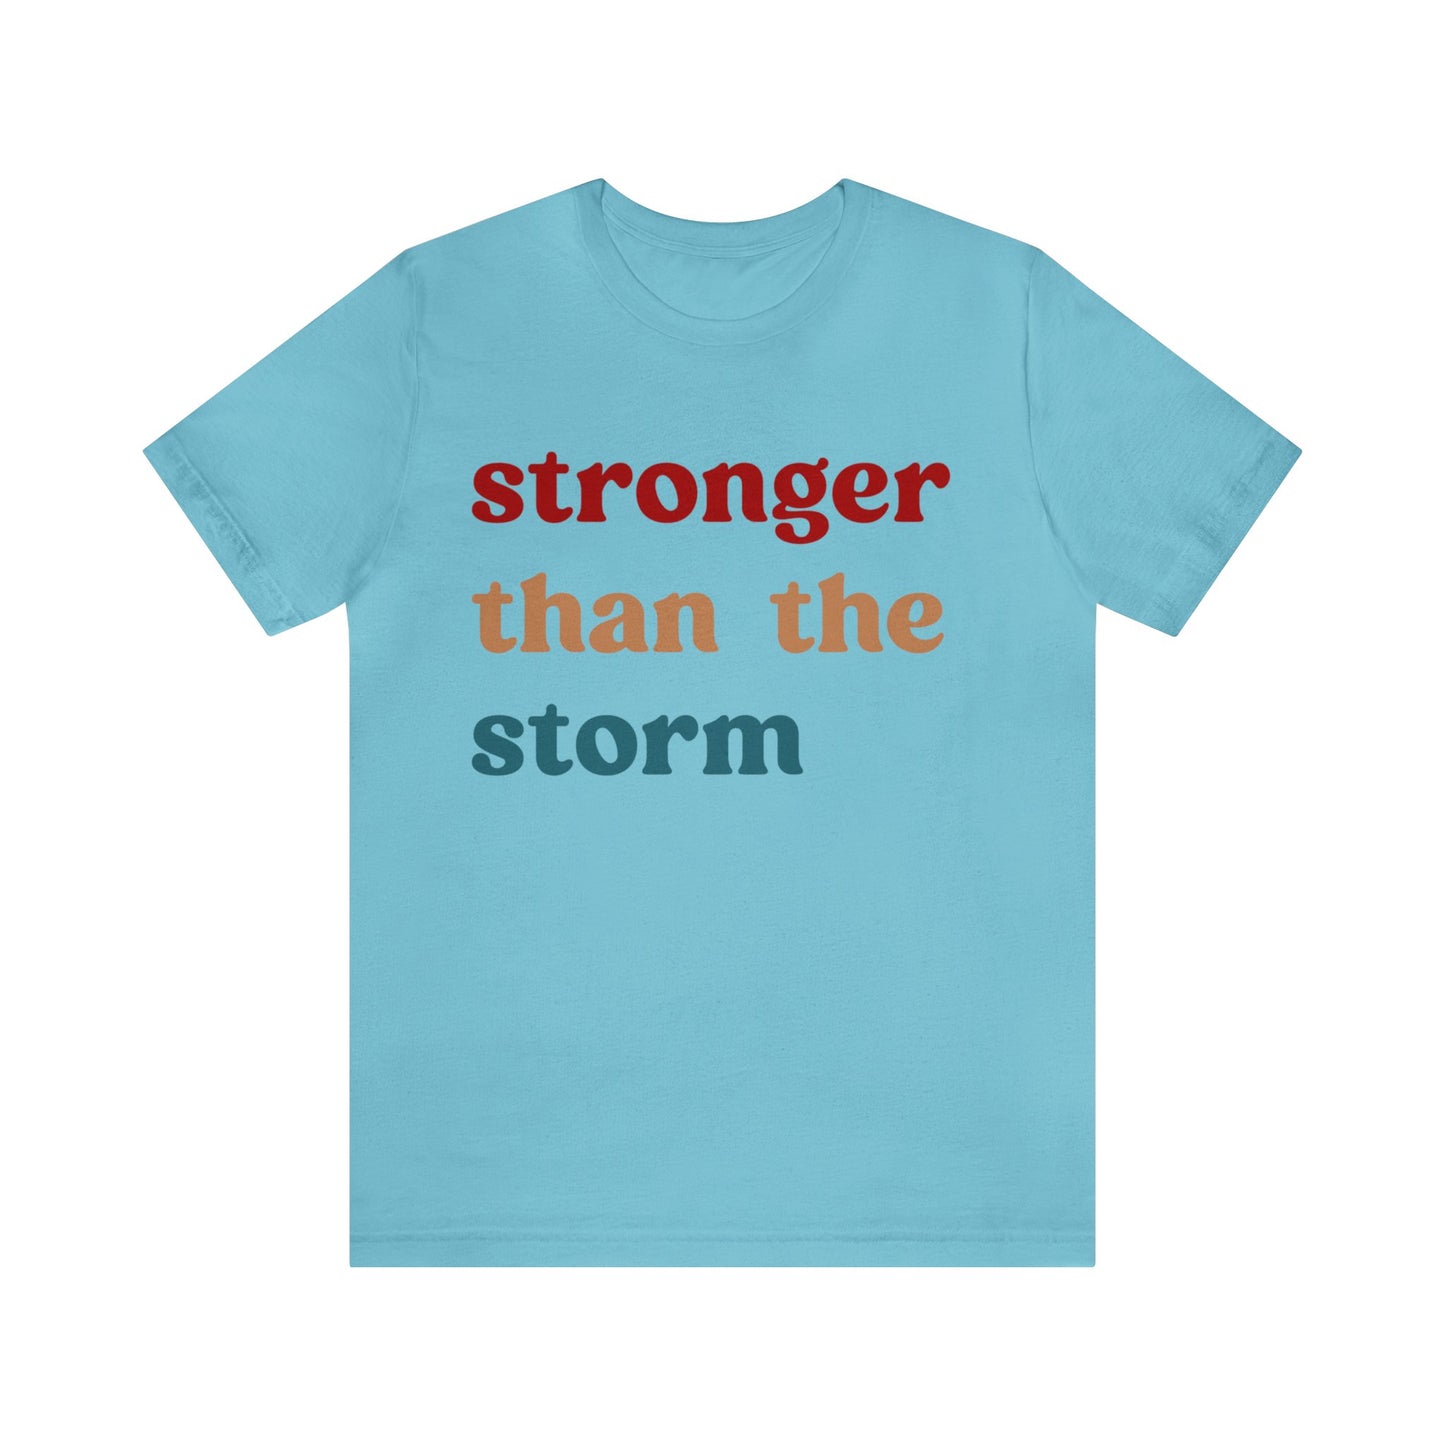 Stronger Than The Storm Shirt, Godly Woman Shirt, Religious Women Shirt, Shirt for Women, Christian Shirt for Mom, Jesus Lover Shirt, T1225